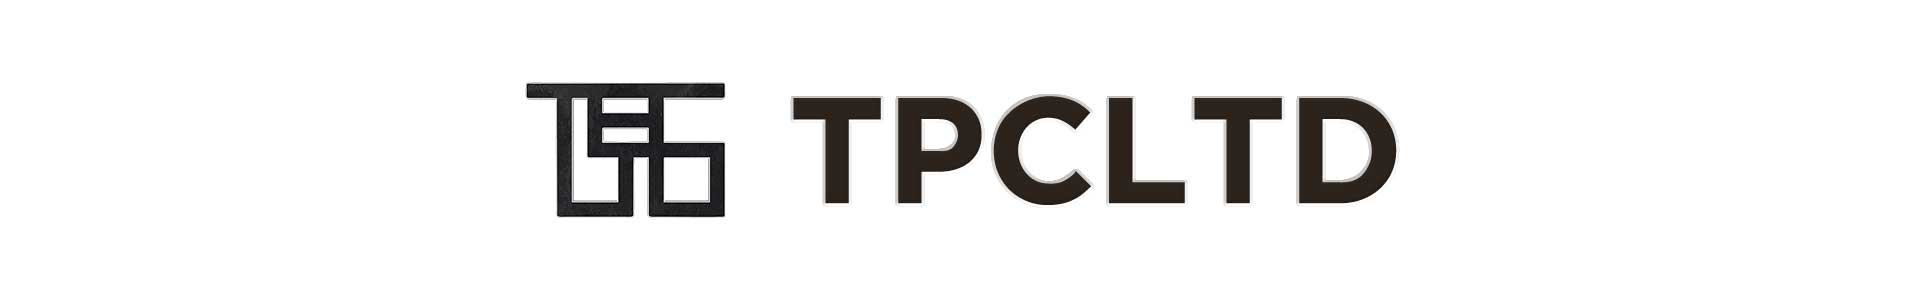 TPCLTD - The Party Cake Ltd